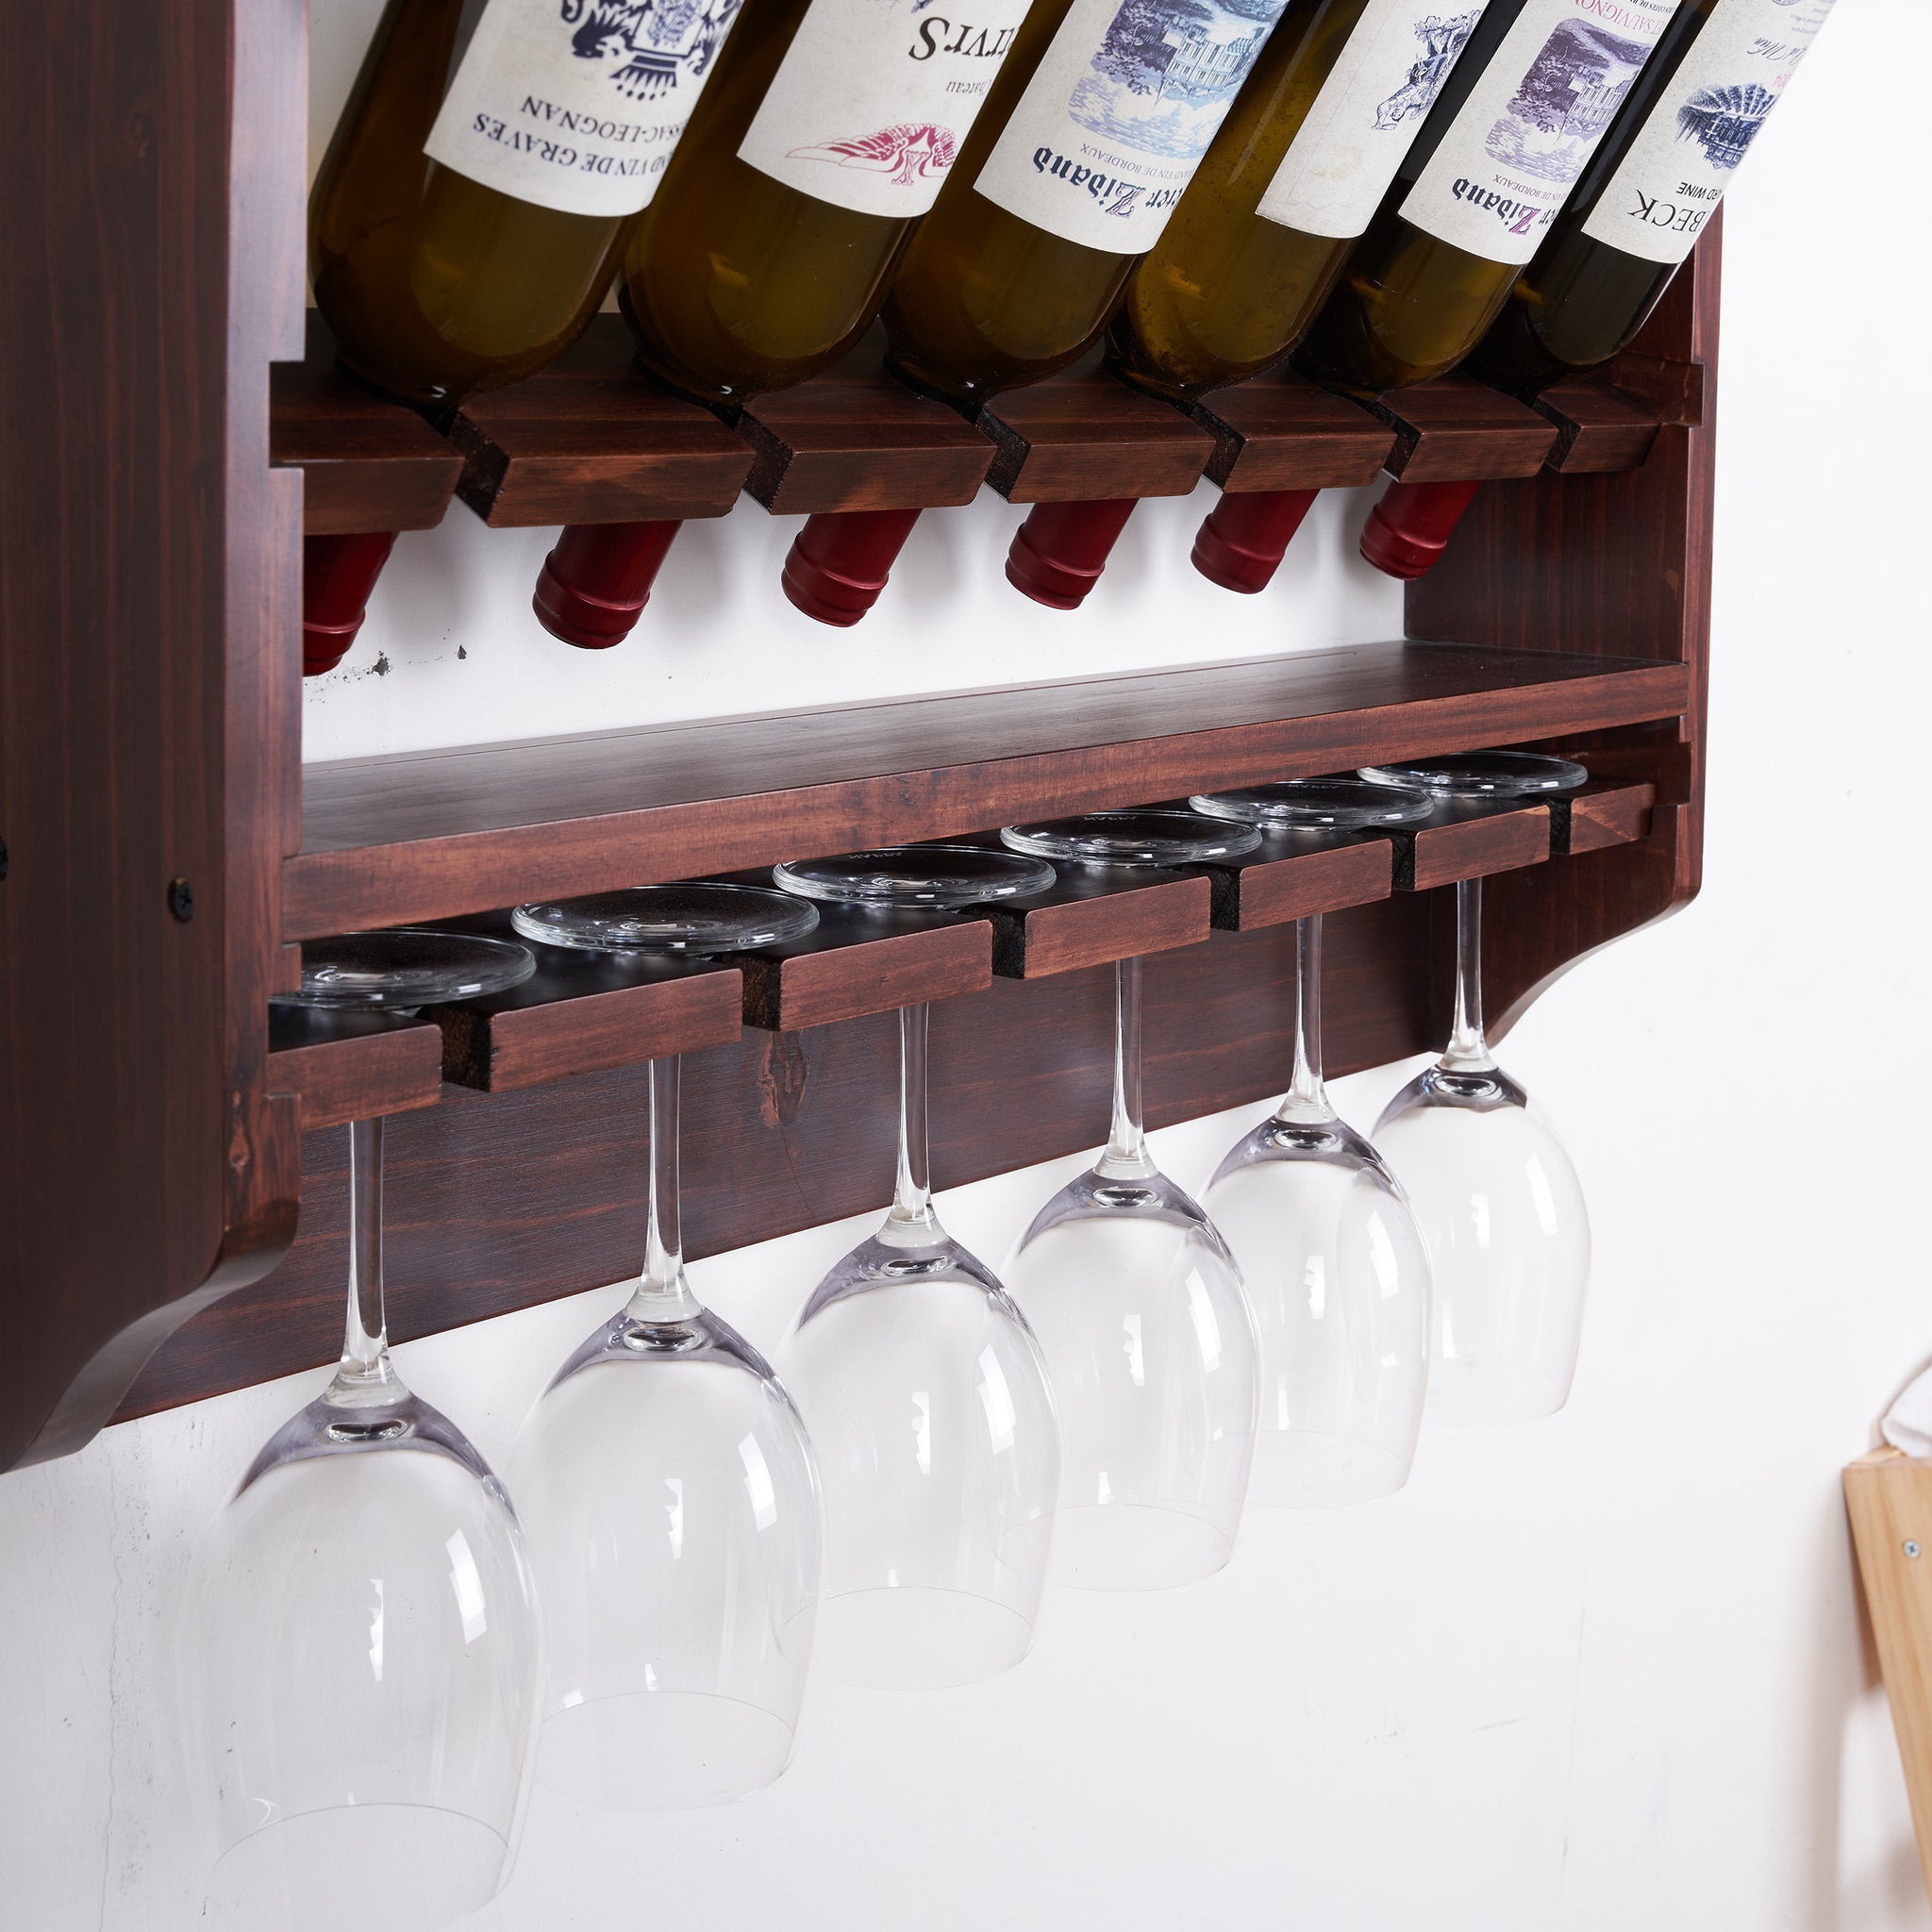 18 bottle wall wine rack wine rack with glass holder walnut-kitchen-american traditional-pine-pine